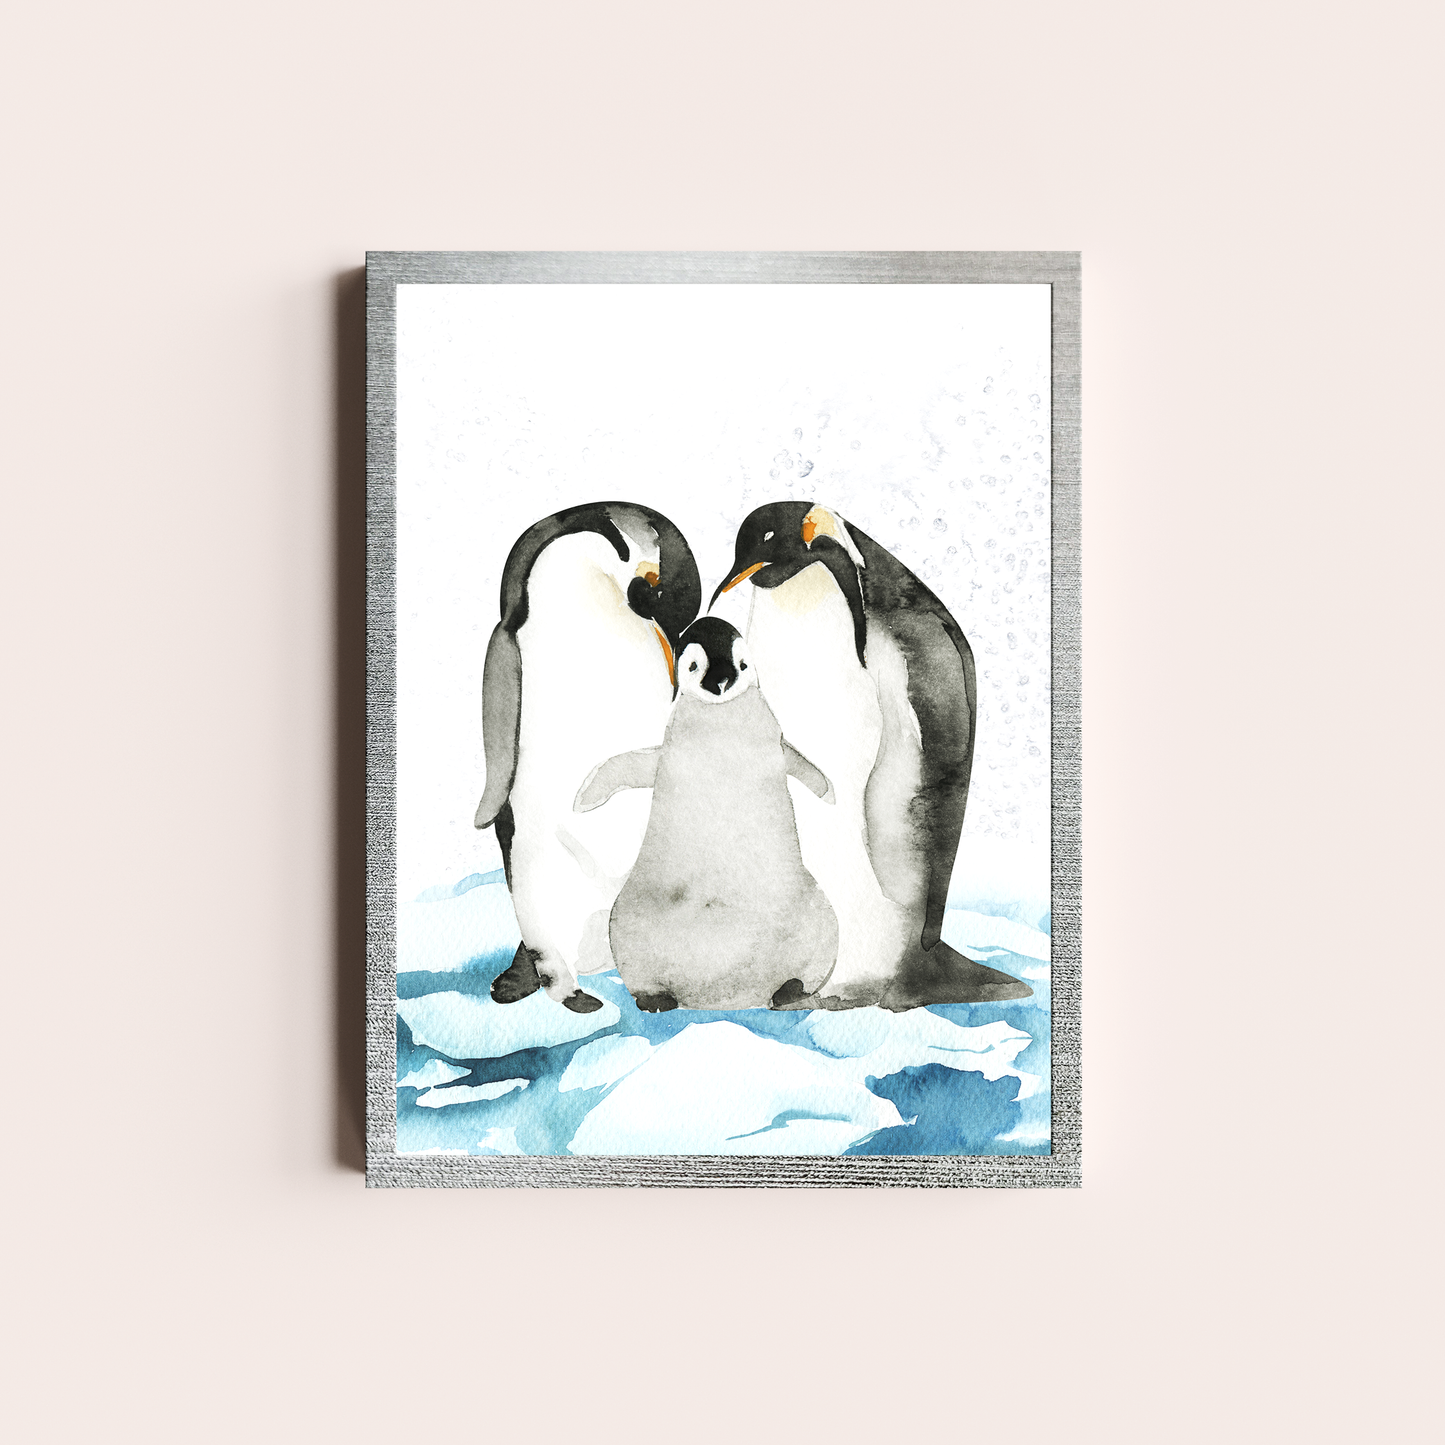 Trio de pingüinos